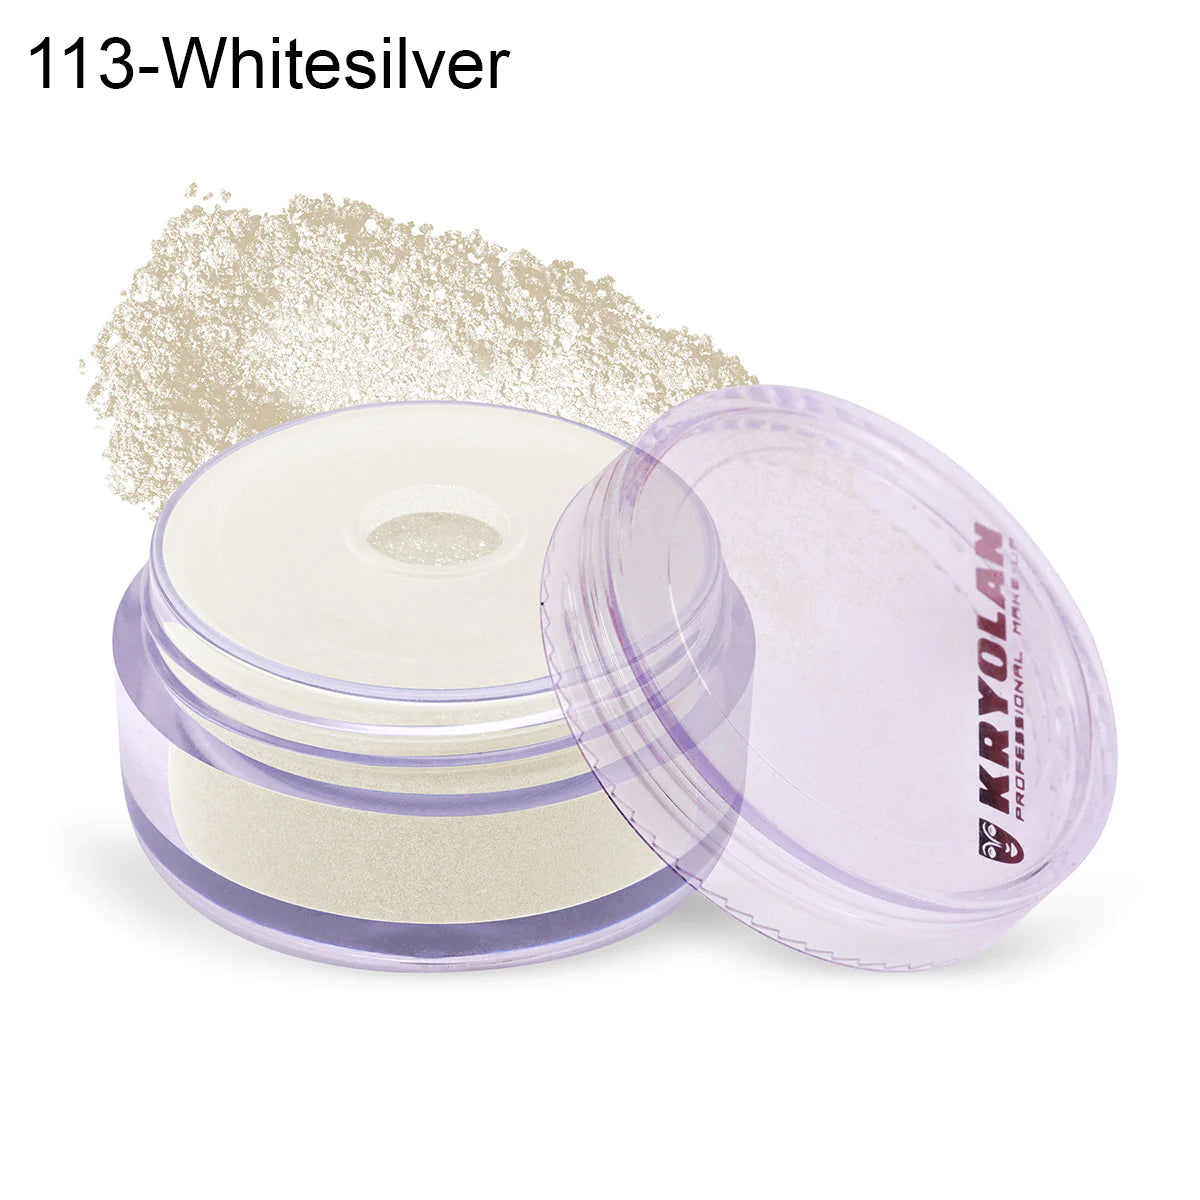 Buy  Kryolan - Satin Powder - 113 whitesilver at Best Price Online in Pakistan